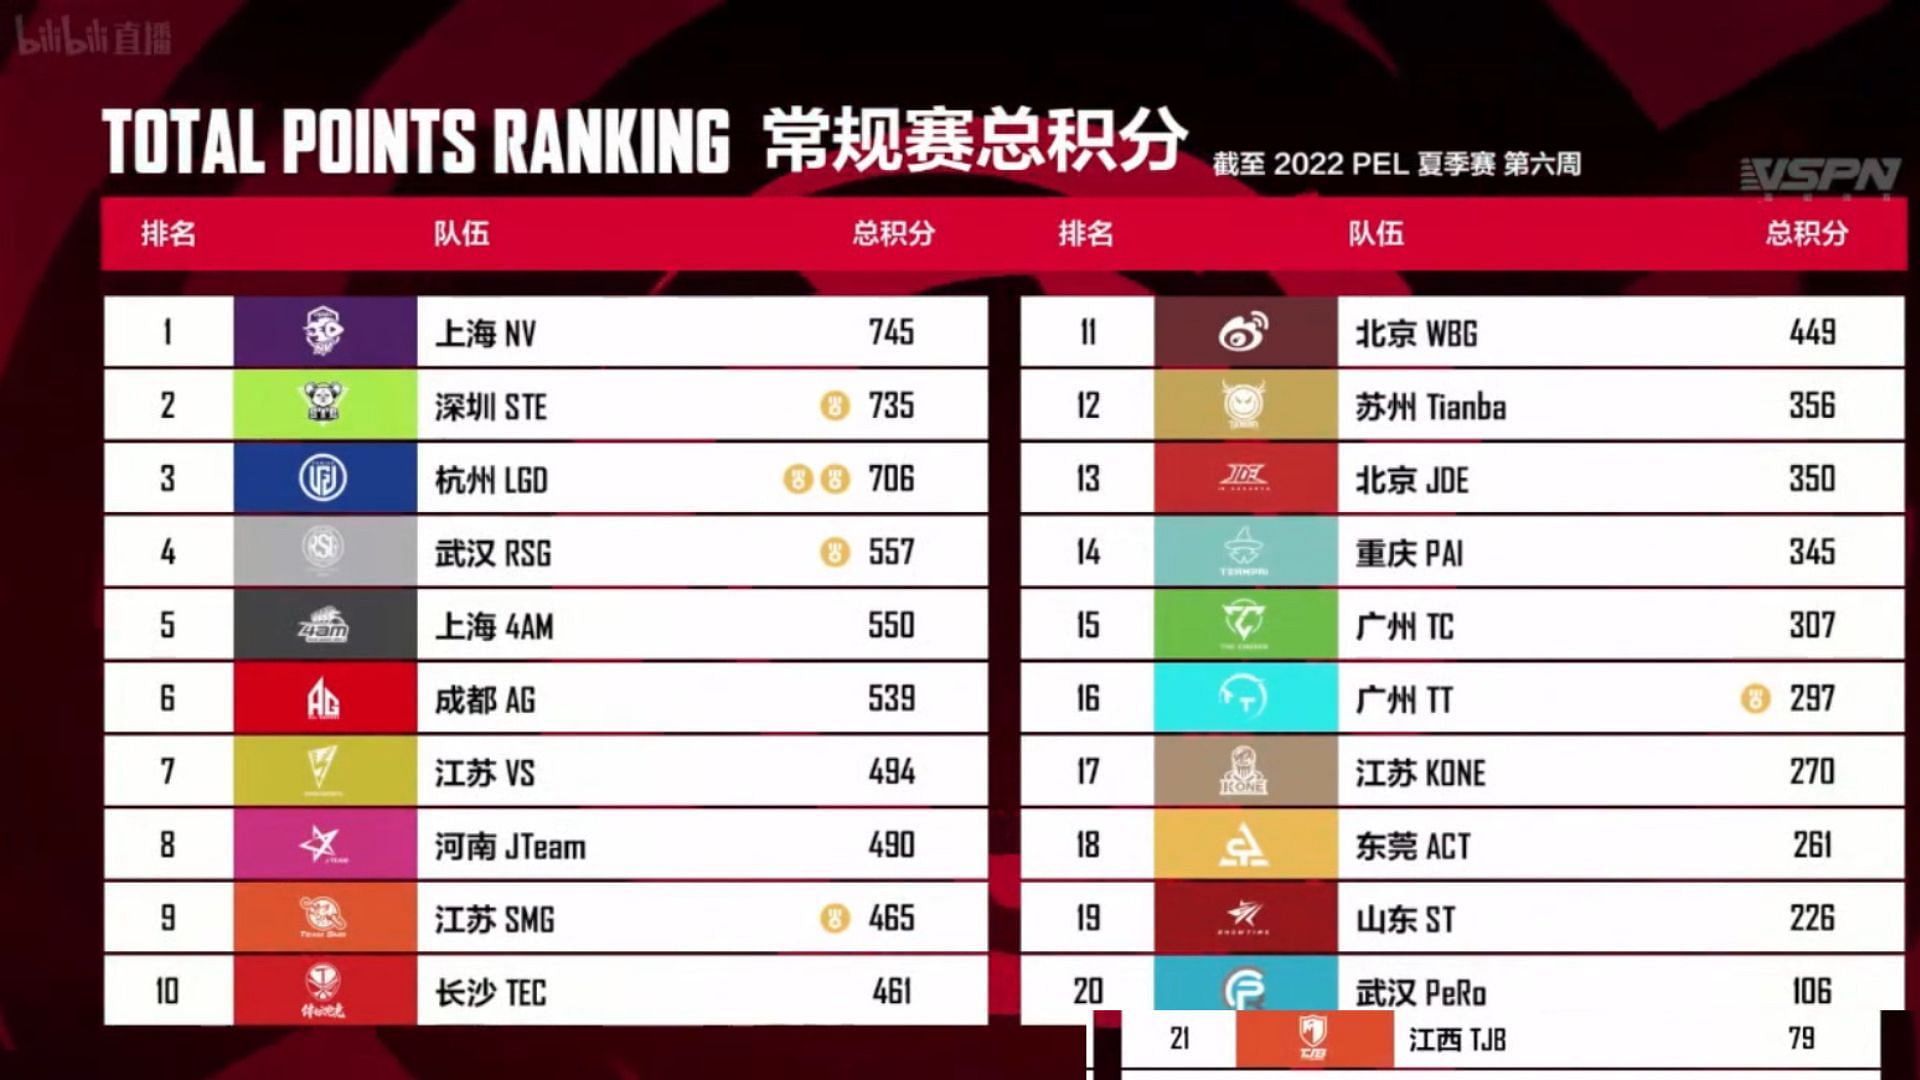 Nova Esports finished top place in regular season (Image via Tencent)